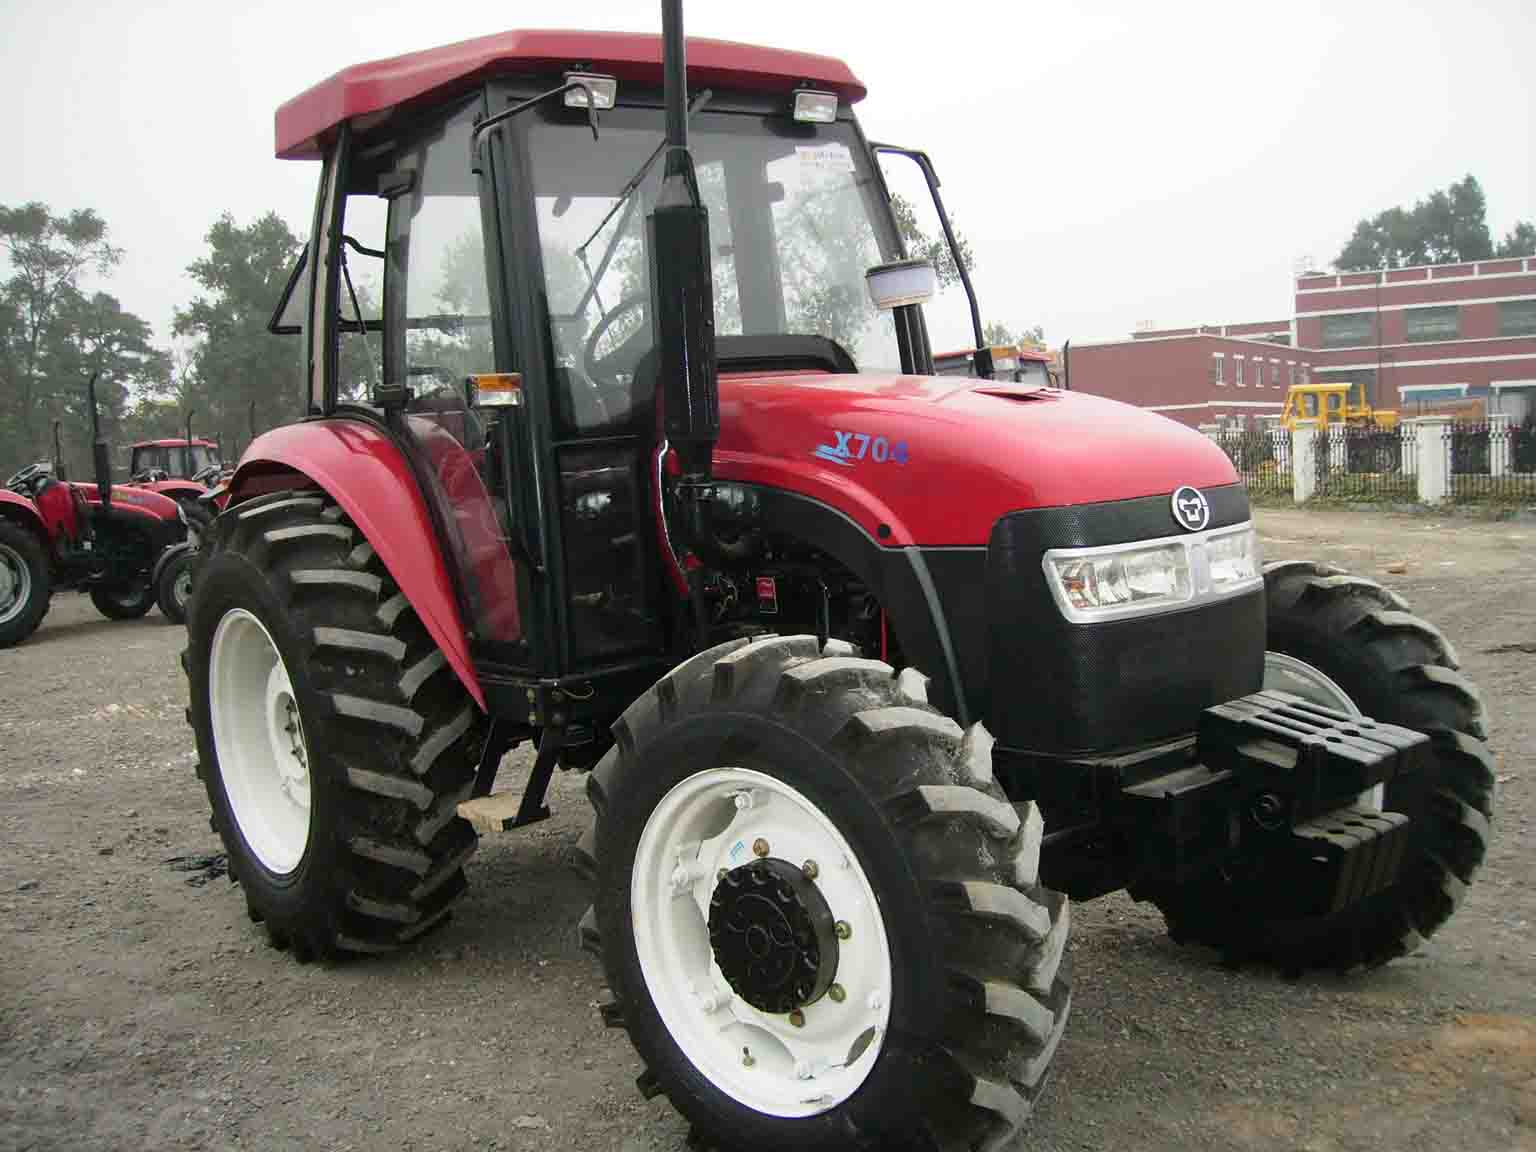 YTO Tractor X704 70 hp